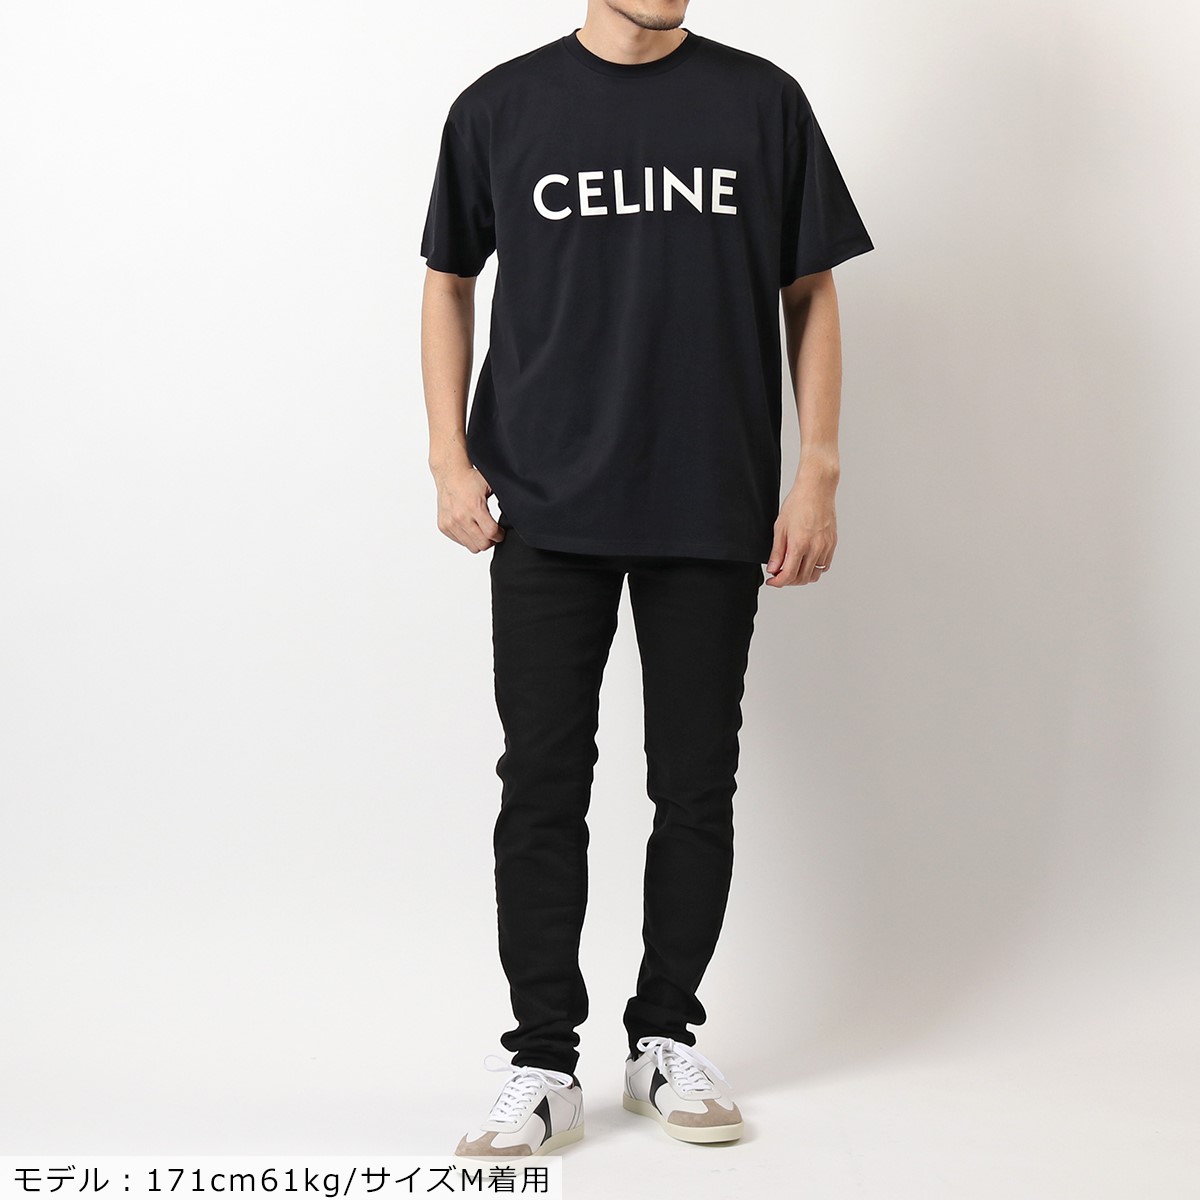 CELINE Tシャツ M | eclipseseal.com